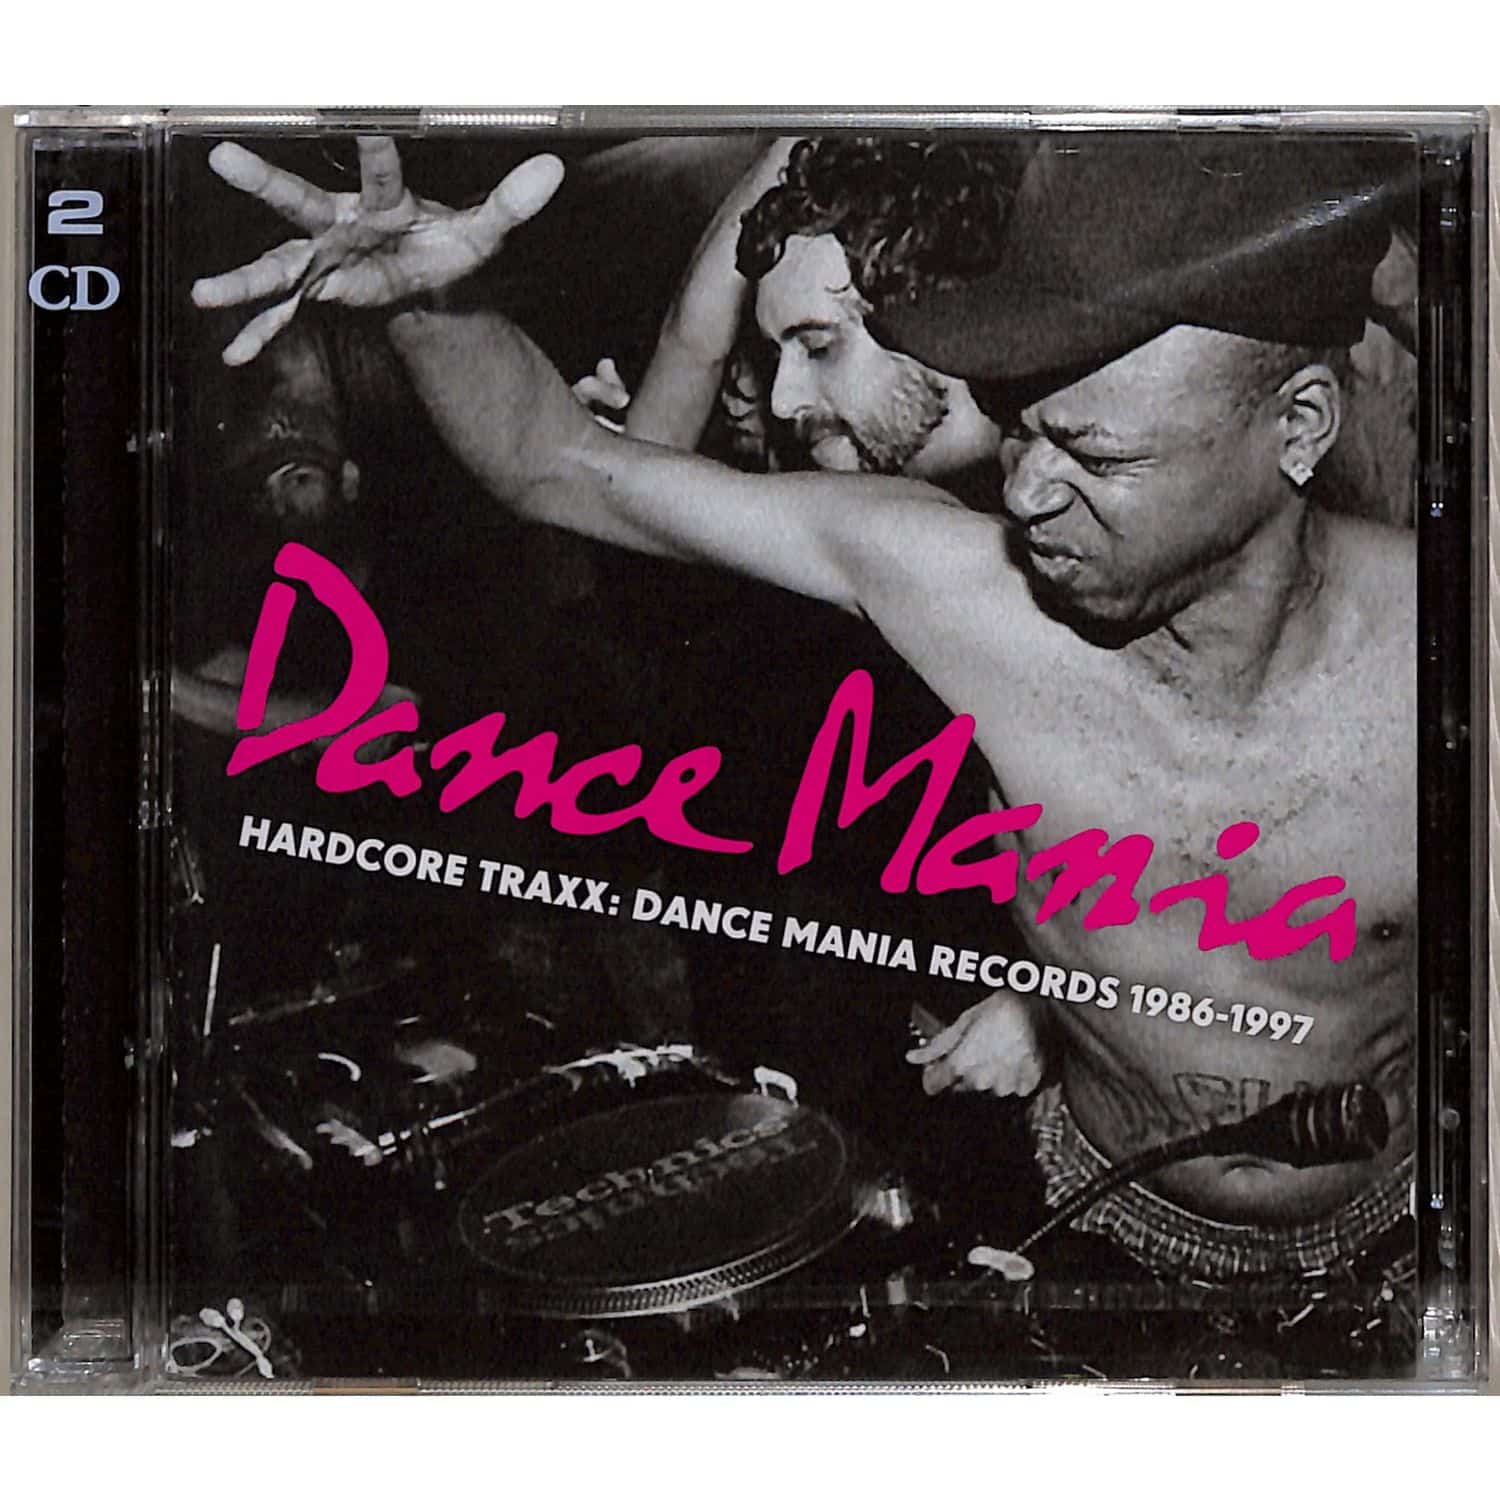 Various Artists - HARDCORE TRAXX: DANCE MANIA RECORDS 1986-1995 